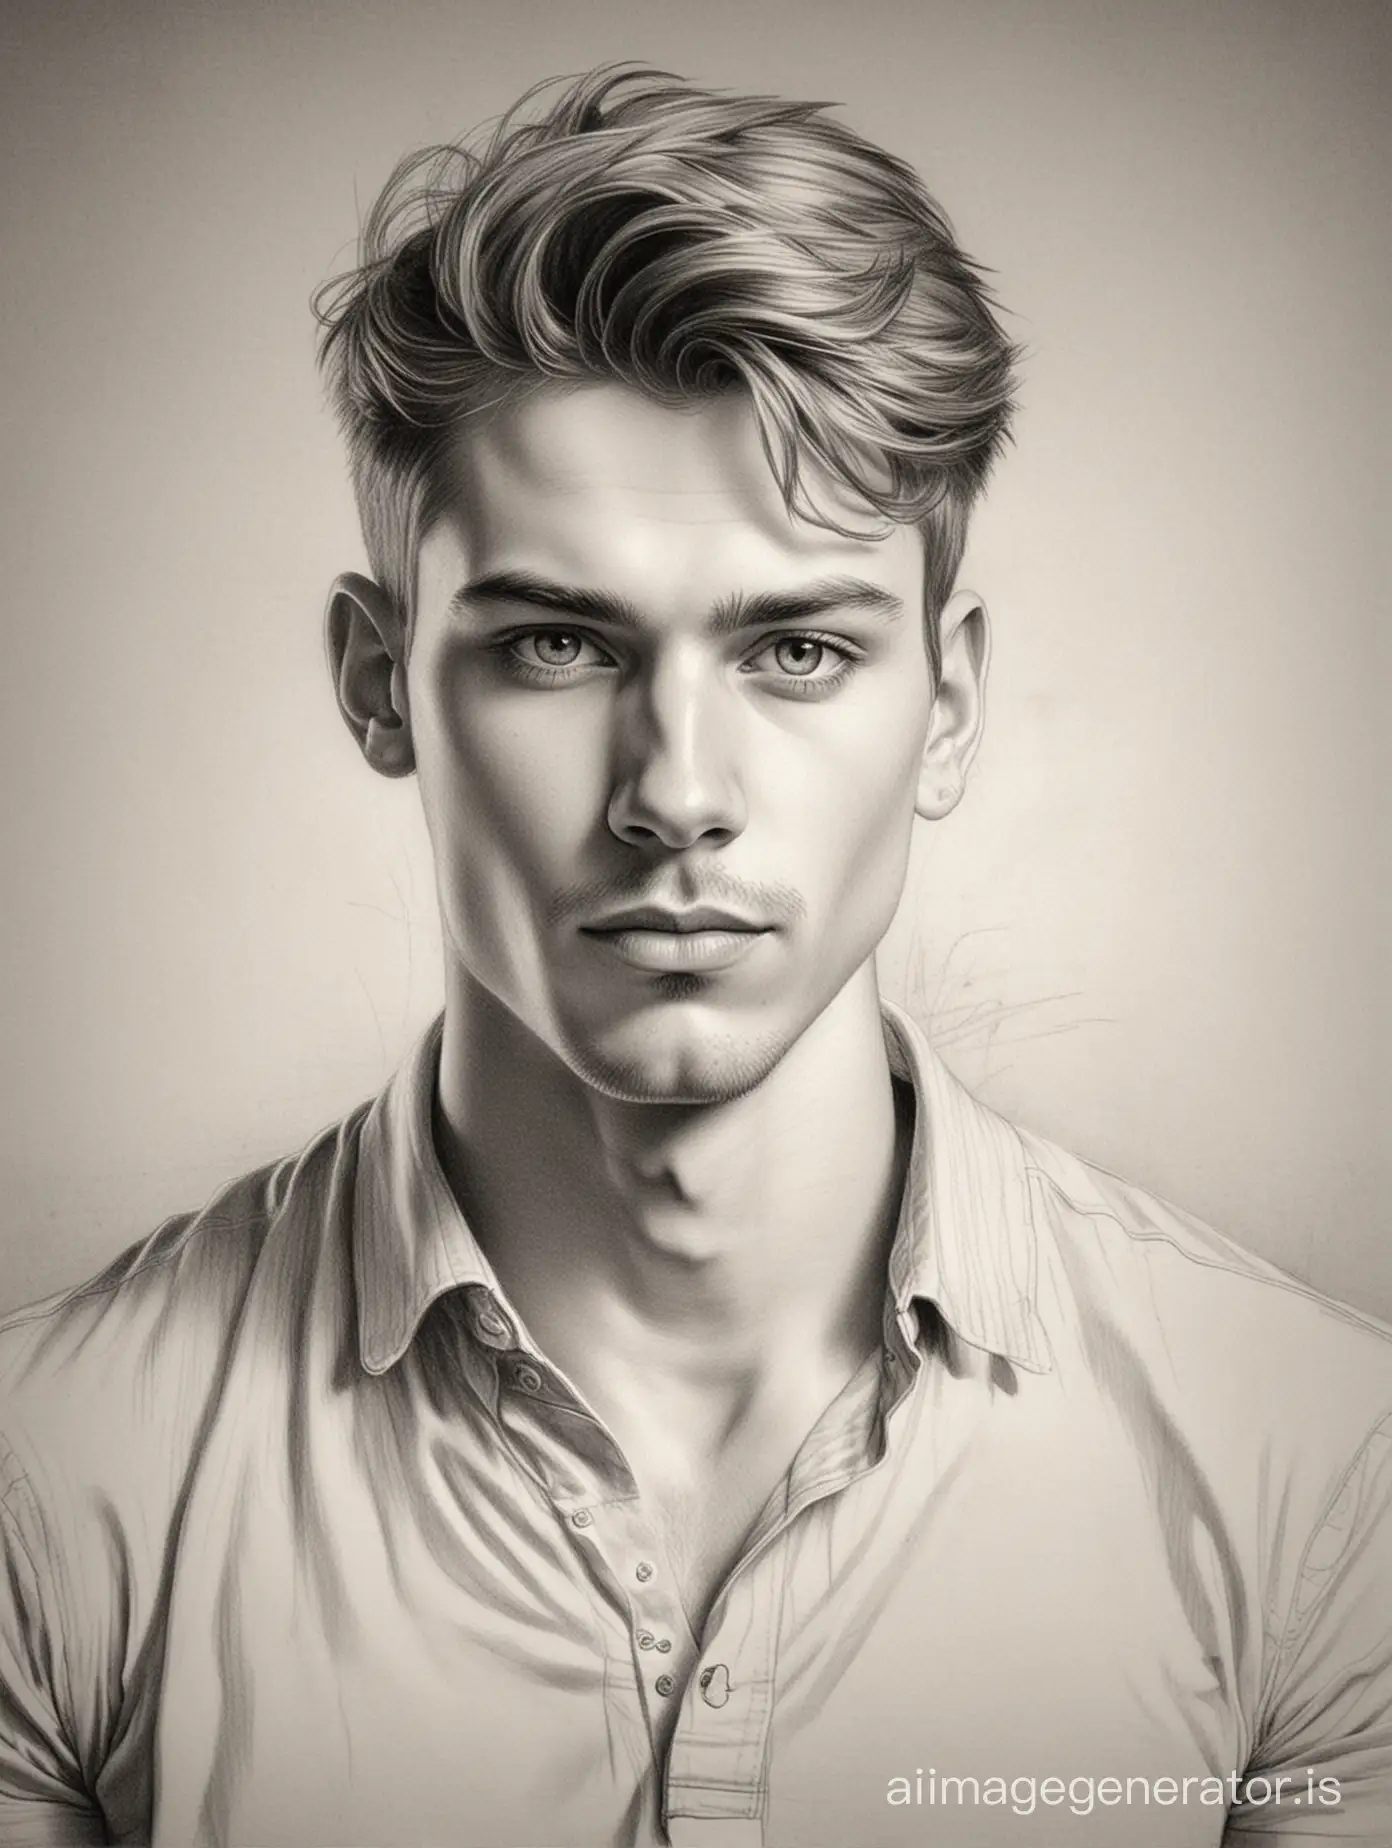 Create an pencil sketch of a young man, posing with attitude,